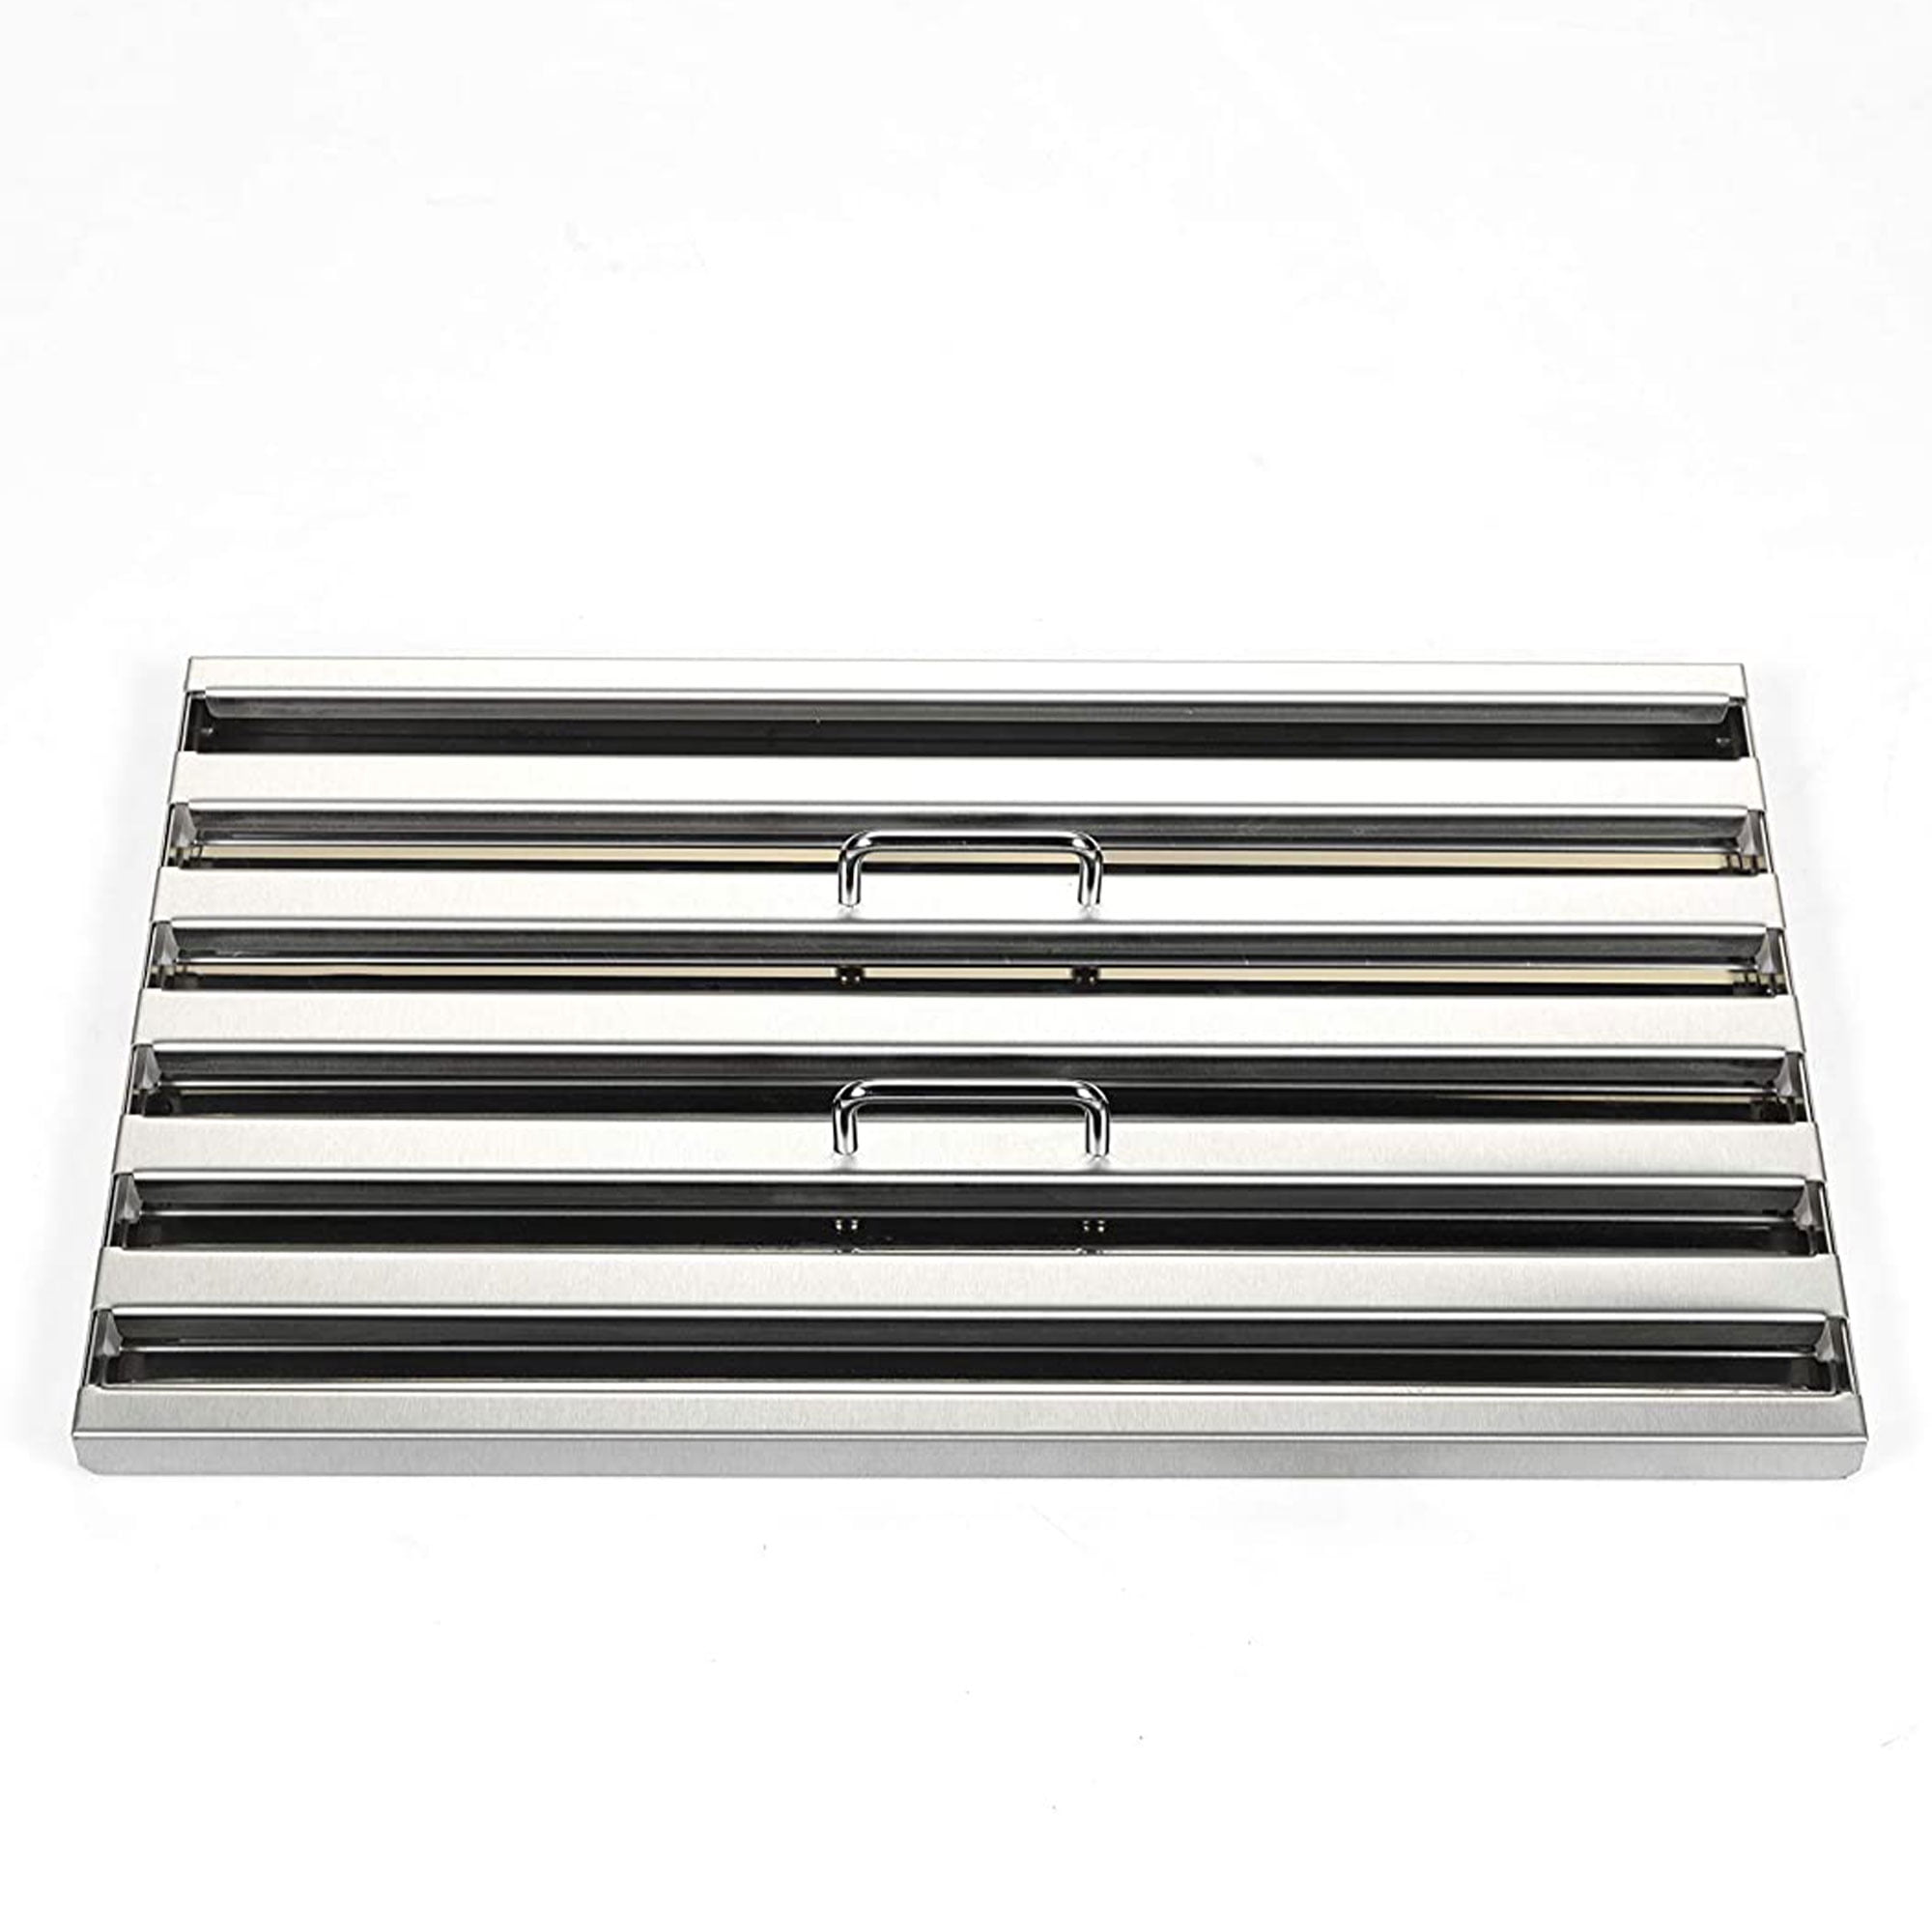 NXR - EH Professional Style Under Cabinet Range Hood, Stainless Steel